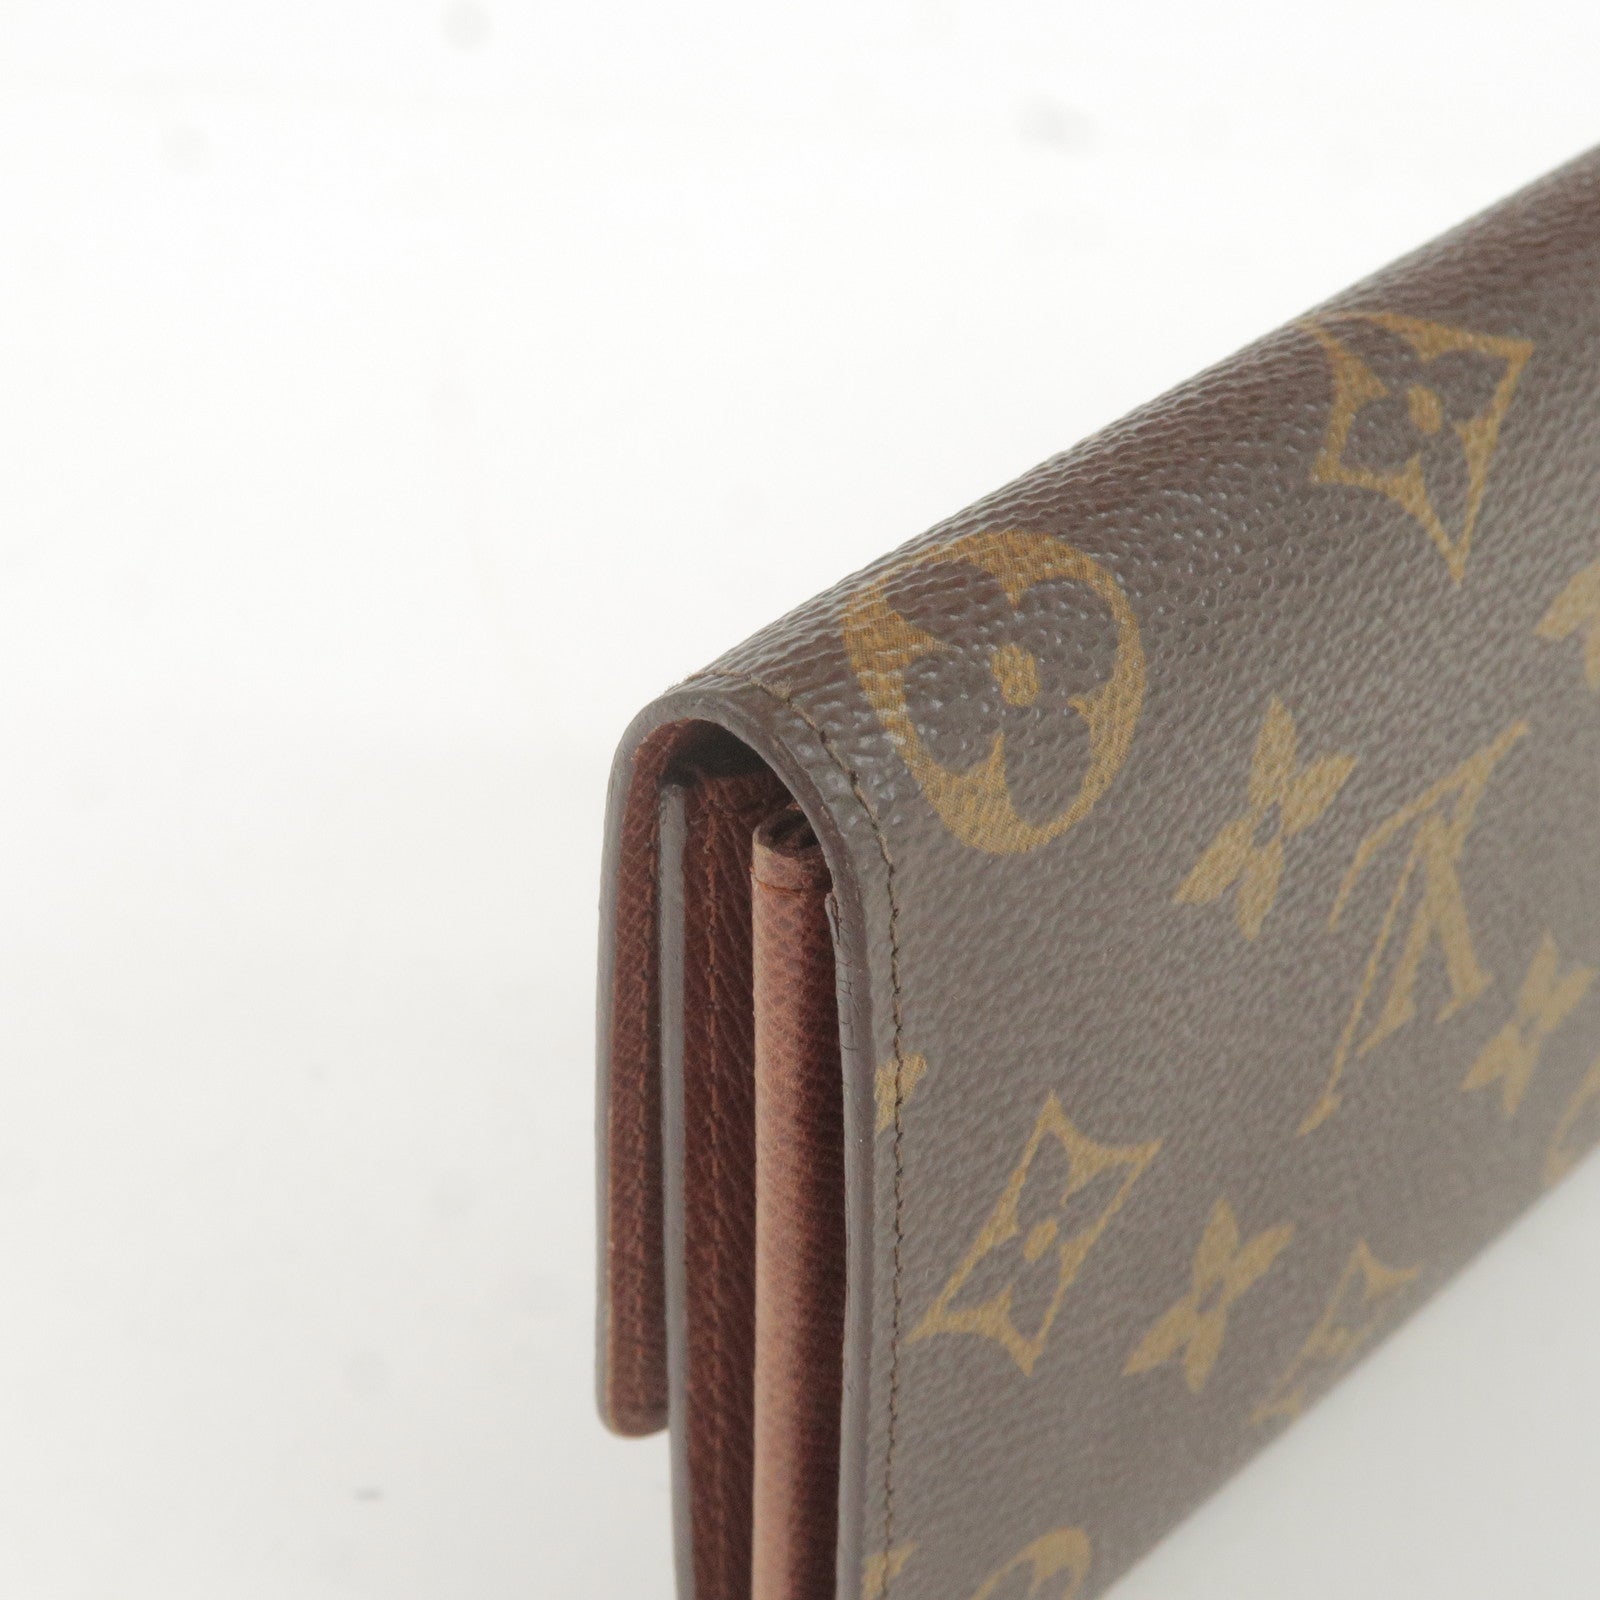 Louis Vuitton Organizer De Poche Brown Leather Wallet (Pre-Owned